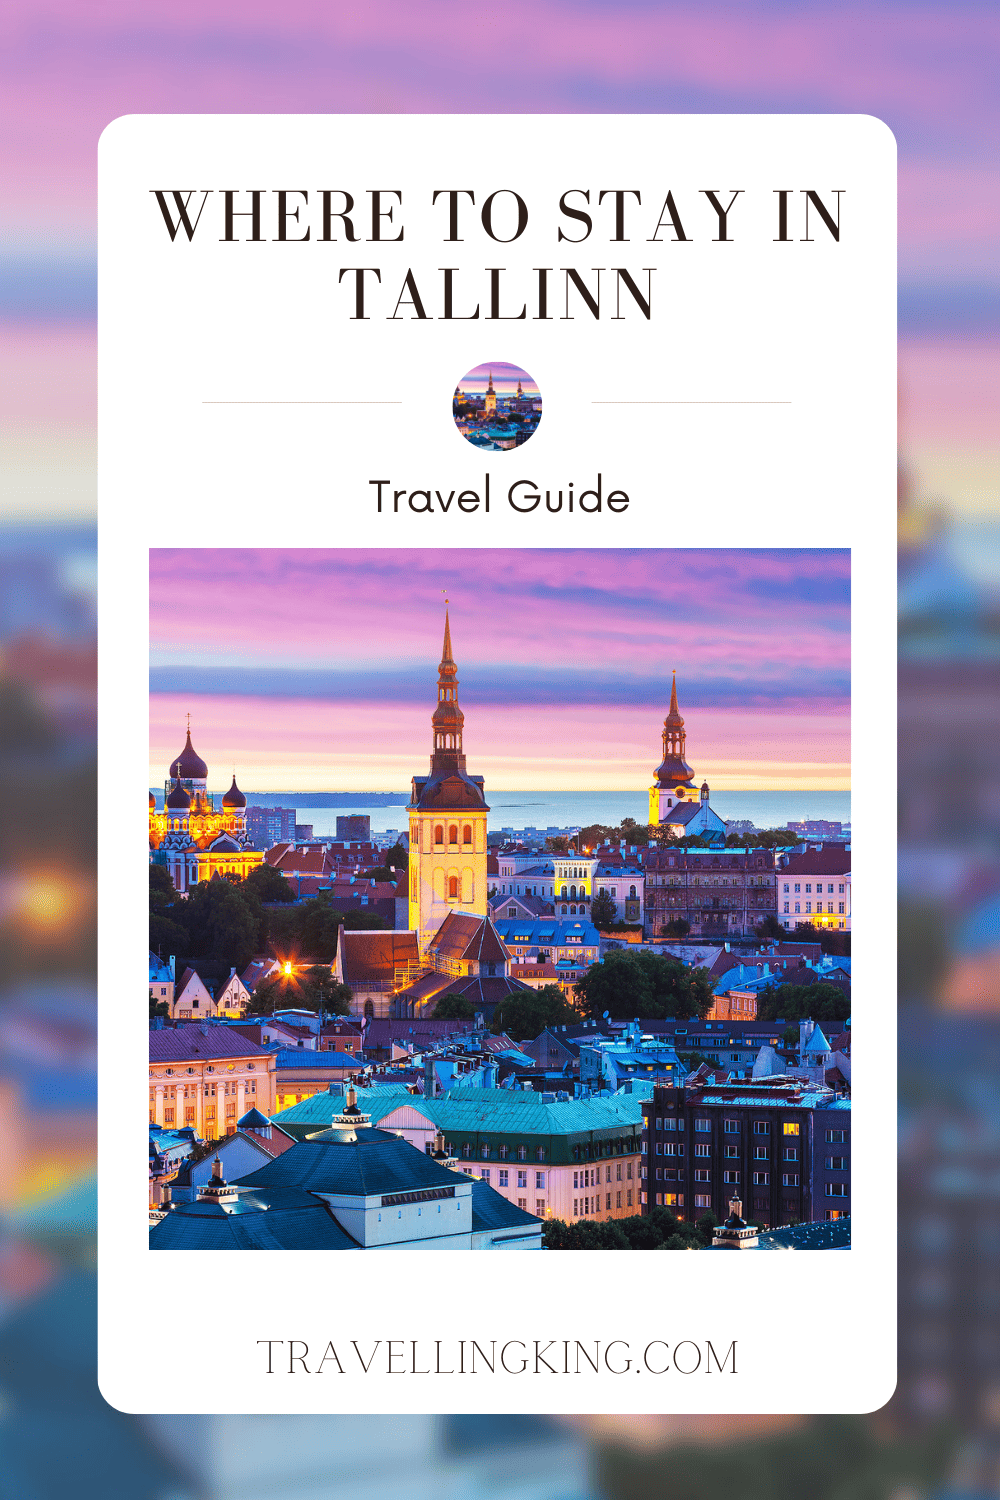 Where to stay in Tallinn